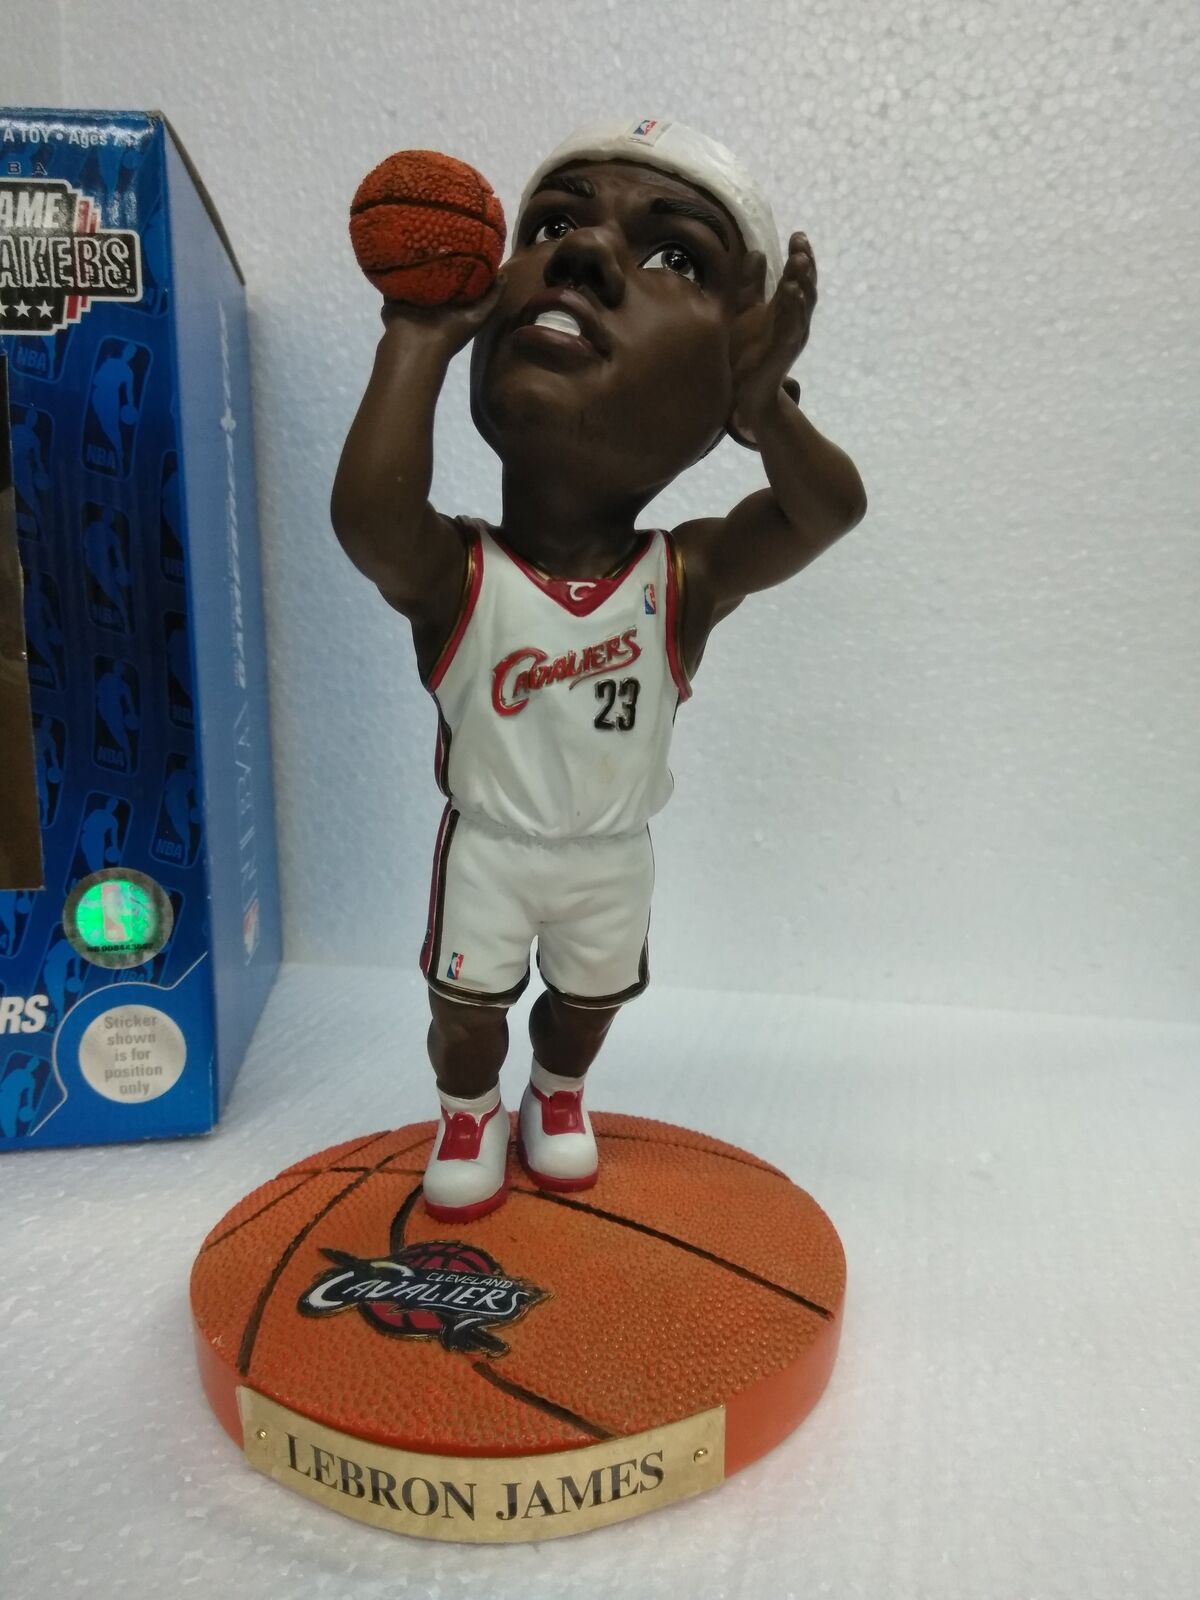 LeBron James Cleveland Cavaliers Figure Statue - Not Bobblehead